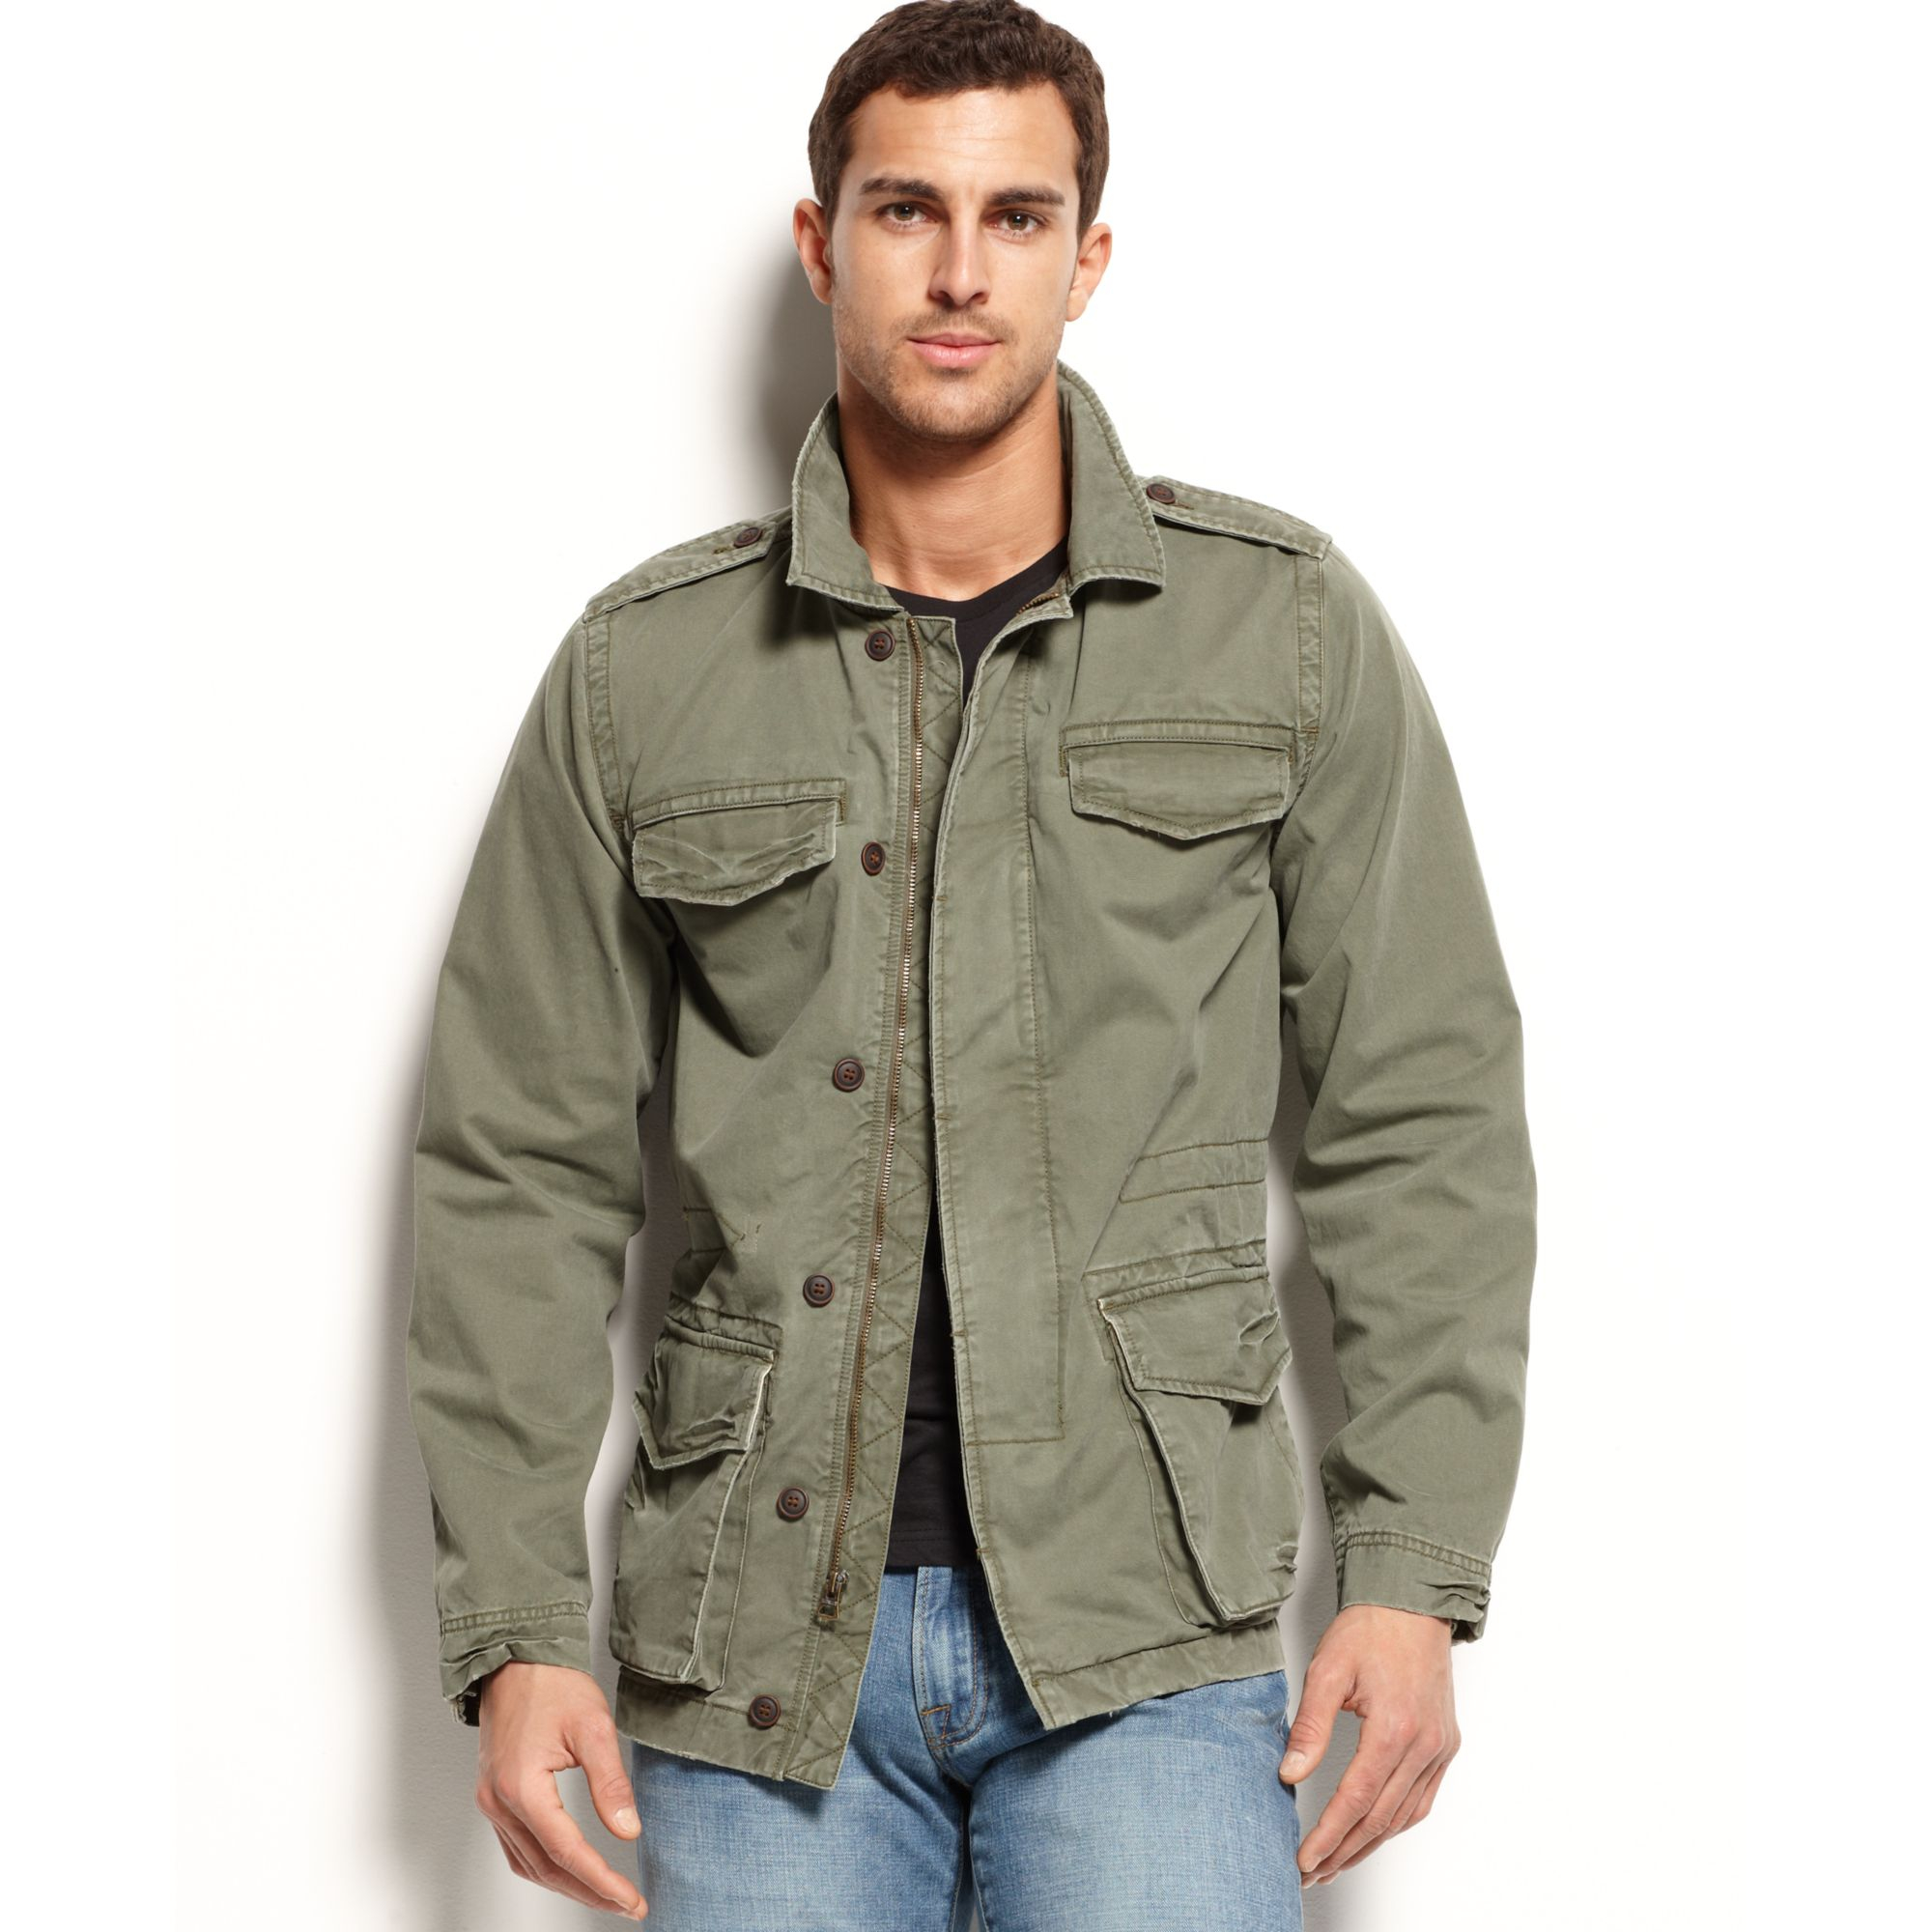 Lyst - Lucky Brand M65 Field Jacket in Green for Men